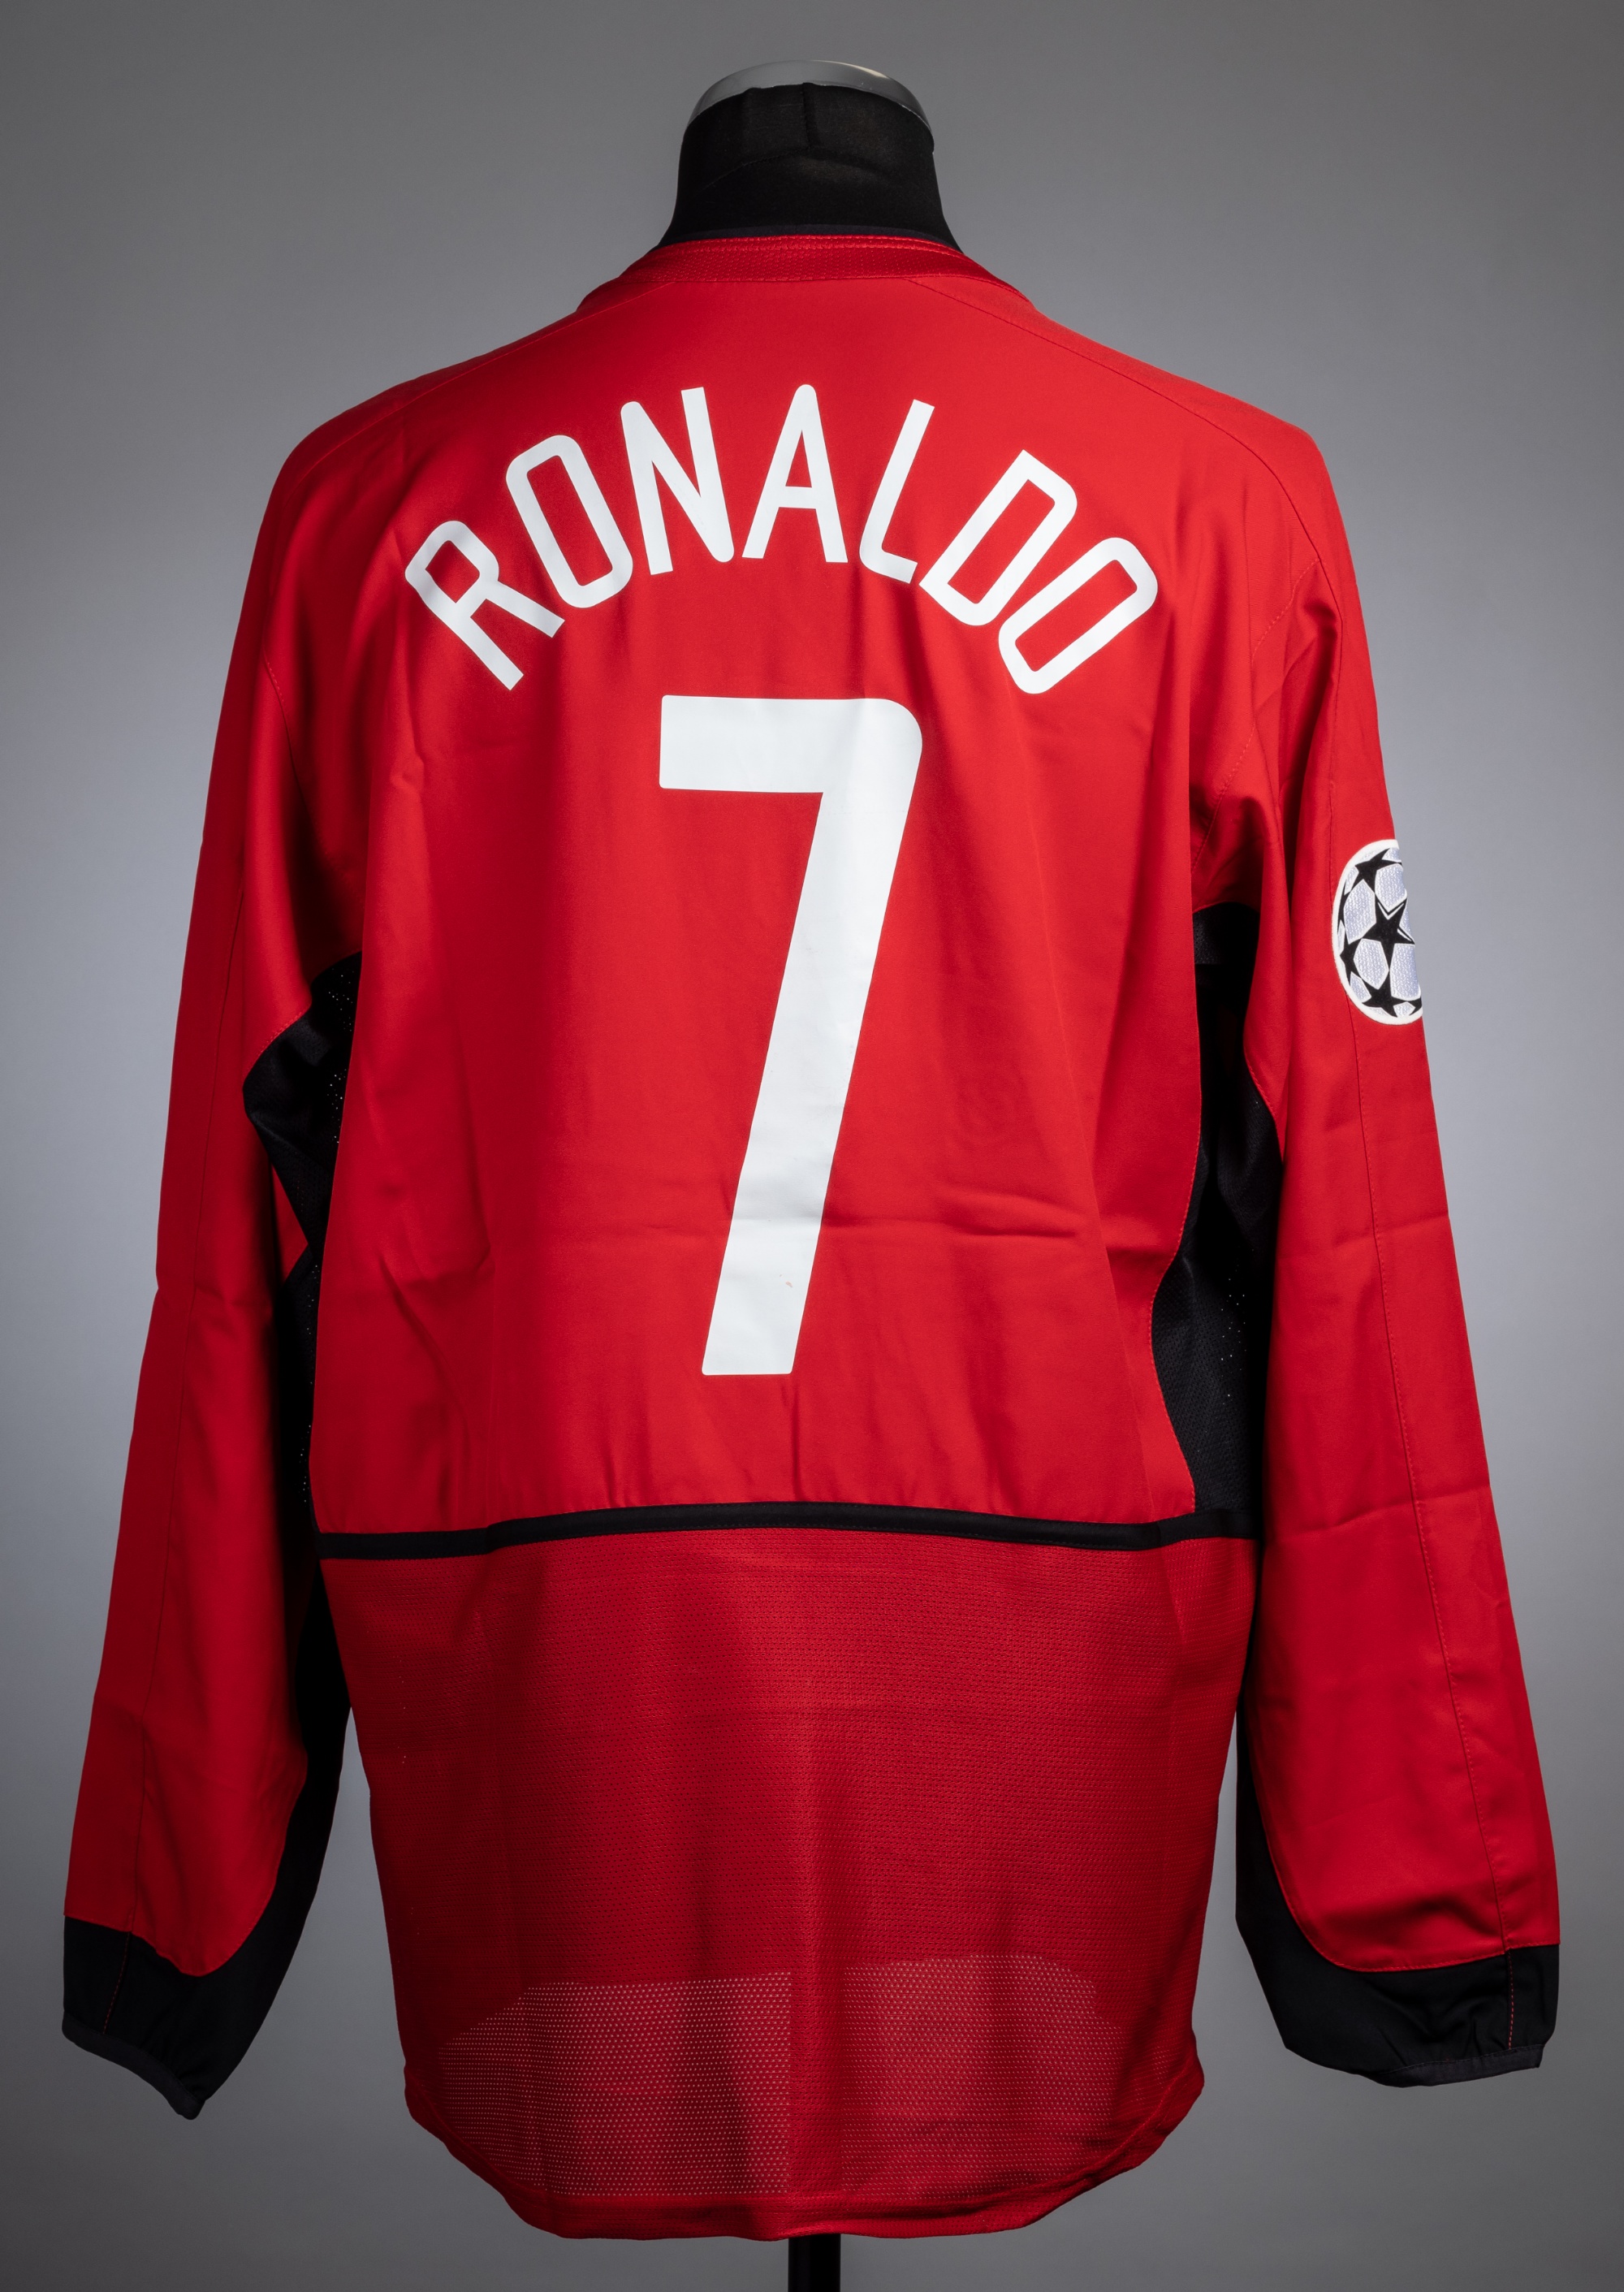 C. Ronaldo red & white Manchester United no.7 jersey prepared for the match v VfB Stuttgart, 2003